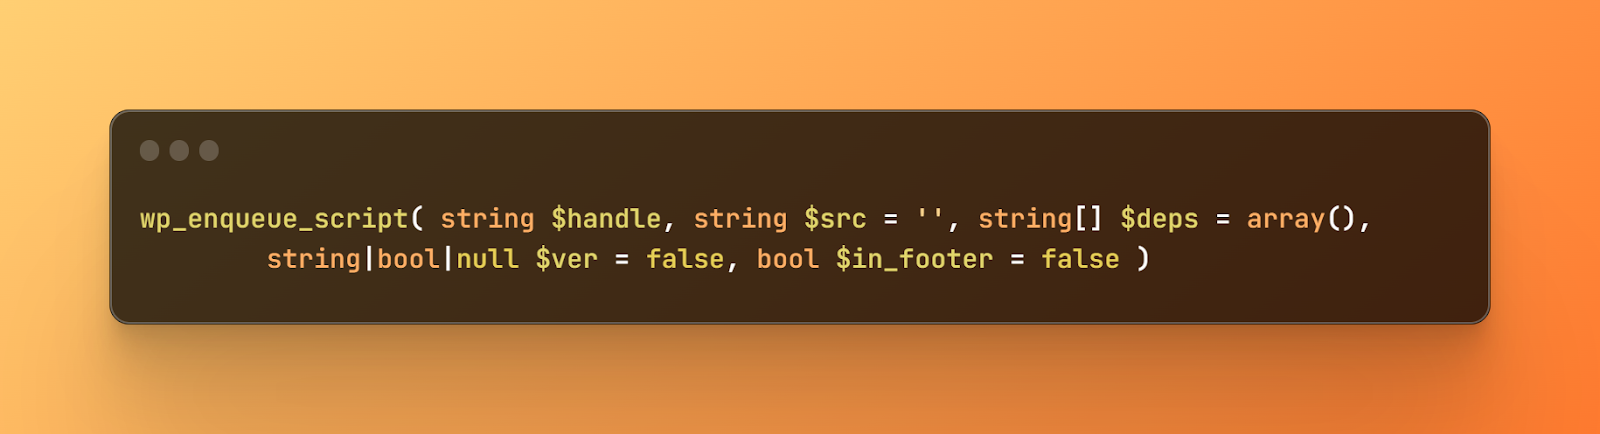 wp_enqueue_script code,wp_enqueue_script( string $handle, string $src = ‘’, string[] $deps = array(), string|bool|null $ver = false, bool $in_footer = false )